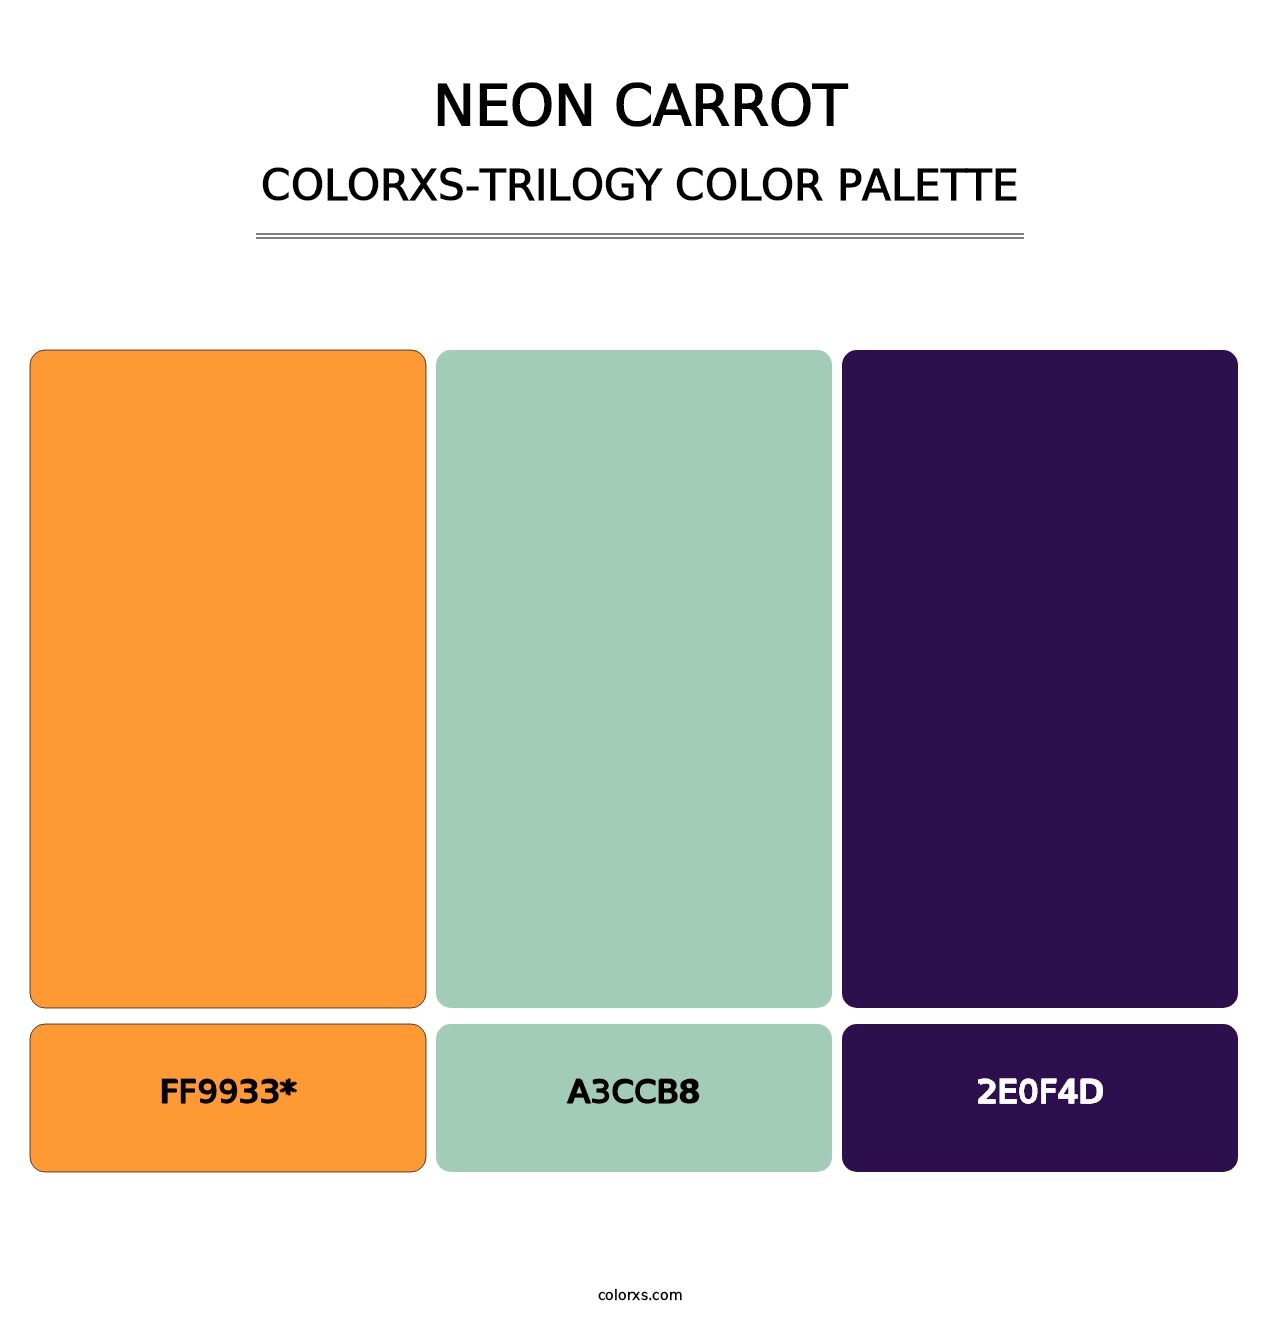 Neon Carrot - Colorxs Trilogy Palette